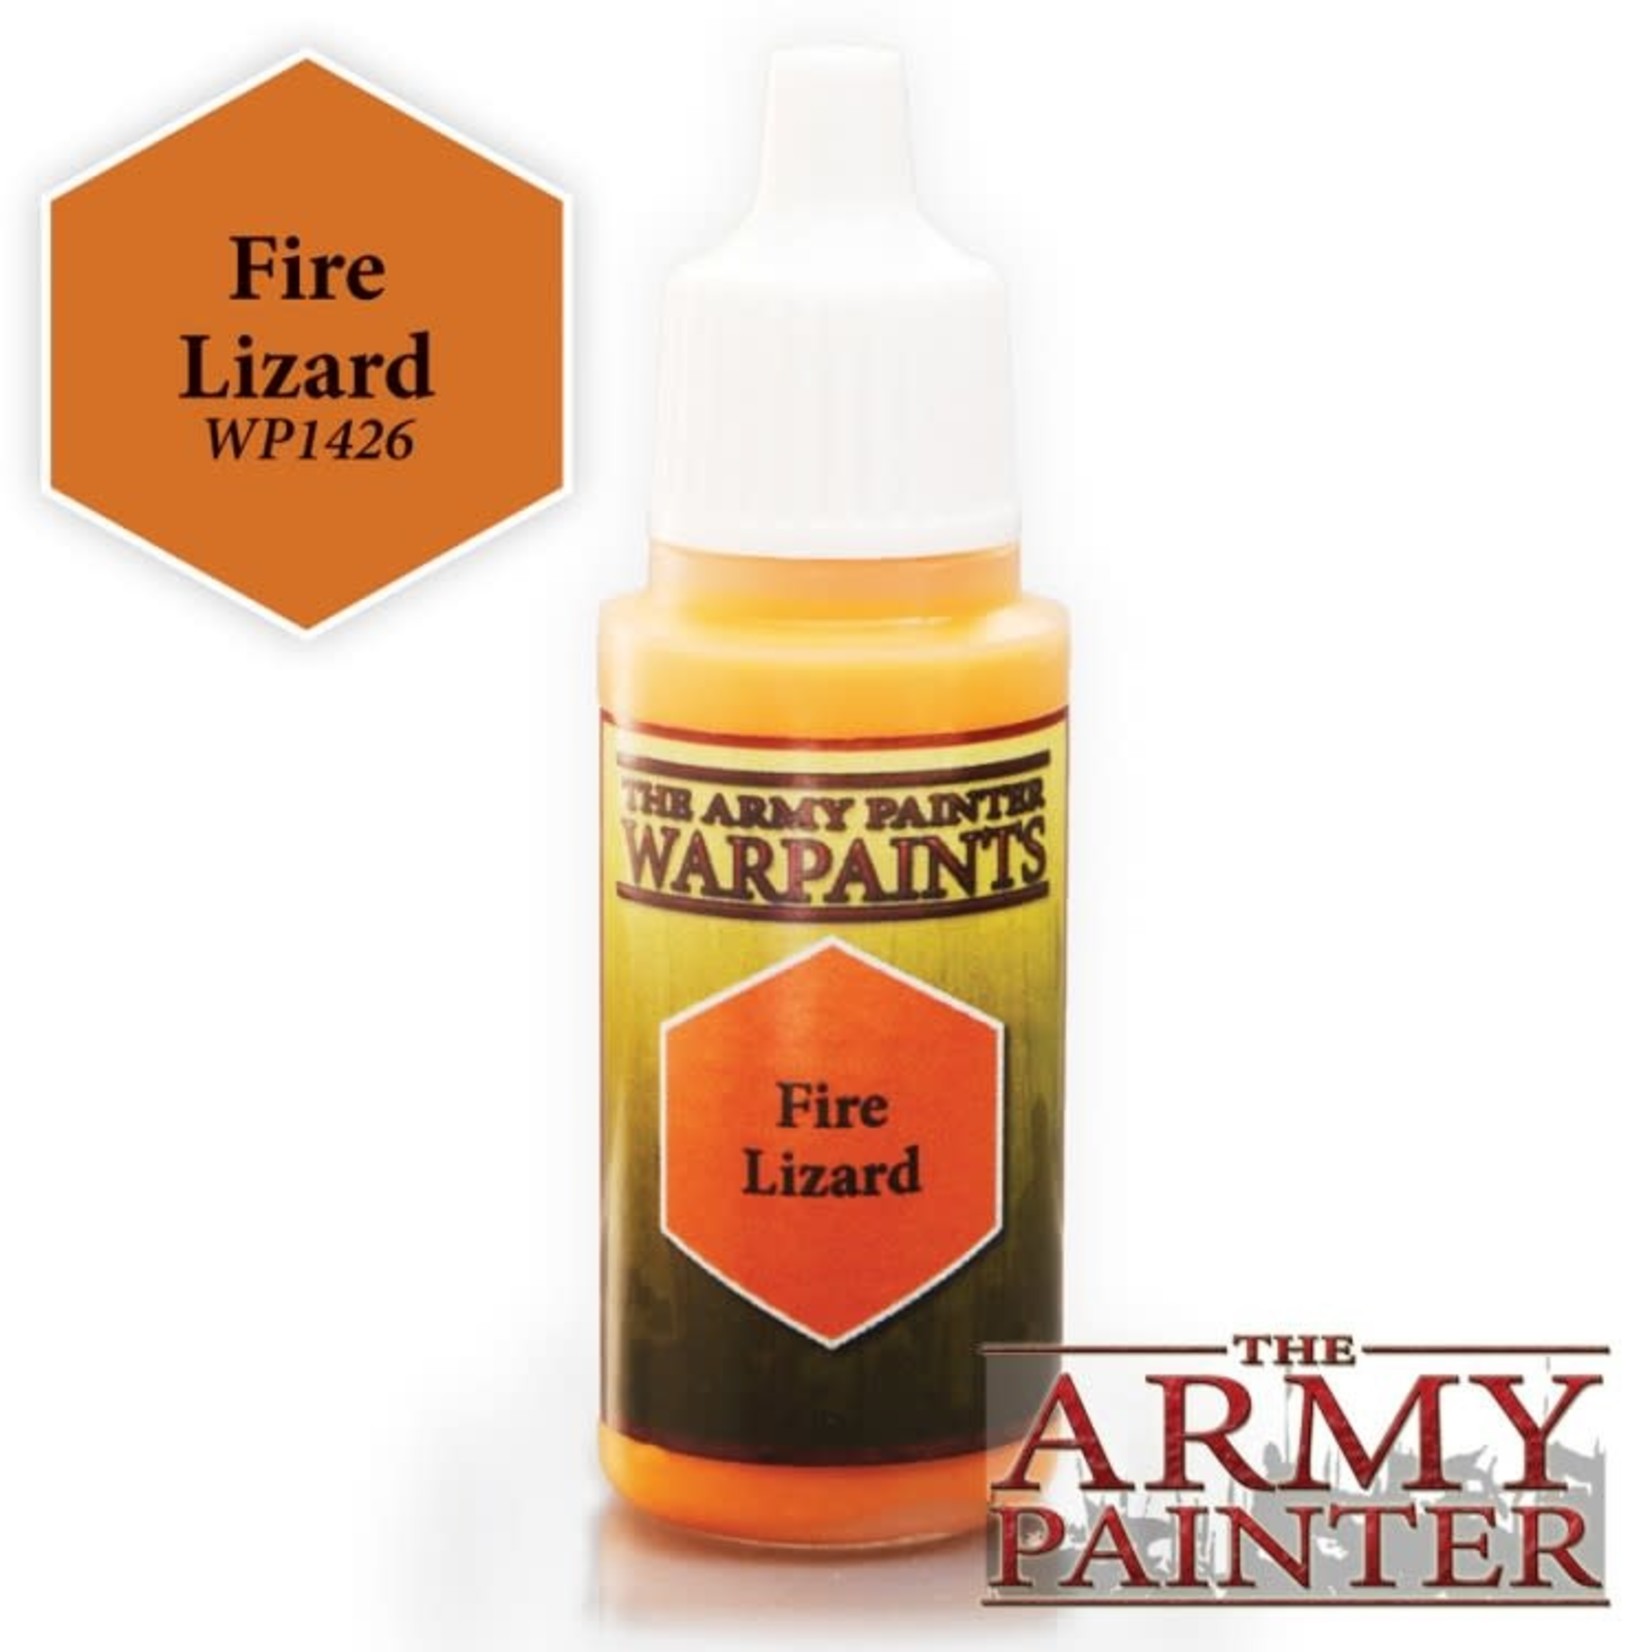 Army Painter Army Painter Warpaints Fire Lizard